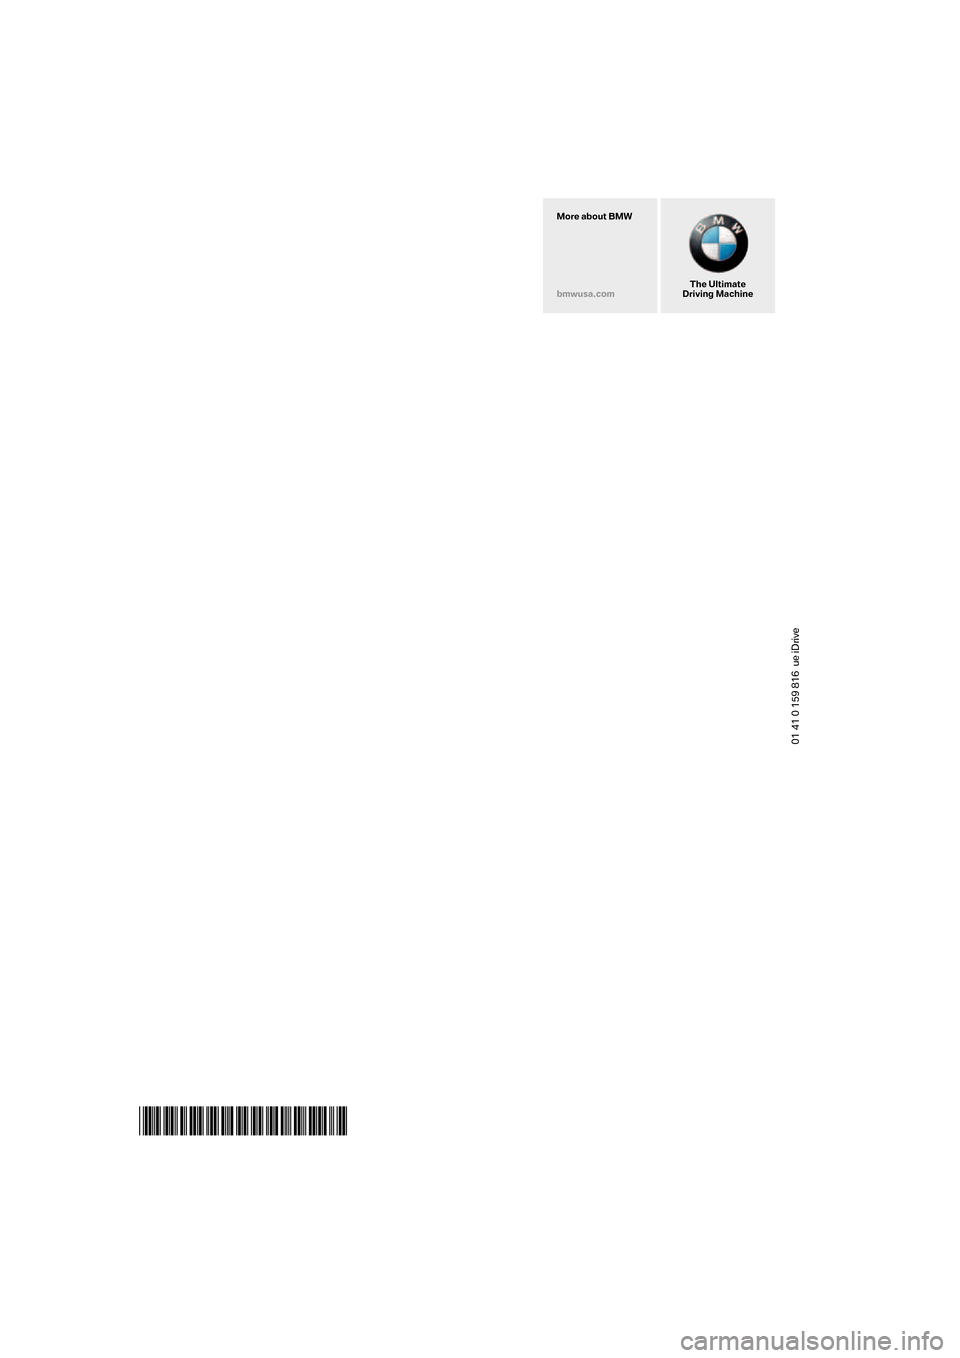 BMW 325I SEDAN 2006 E90 Owners Manual 01 41 0 159 816  ue iDrive
*BL015981600E*
The Ultimate
Driving Machine More about BMW
bmwusa.com 